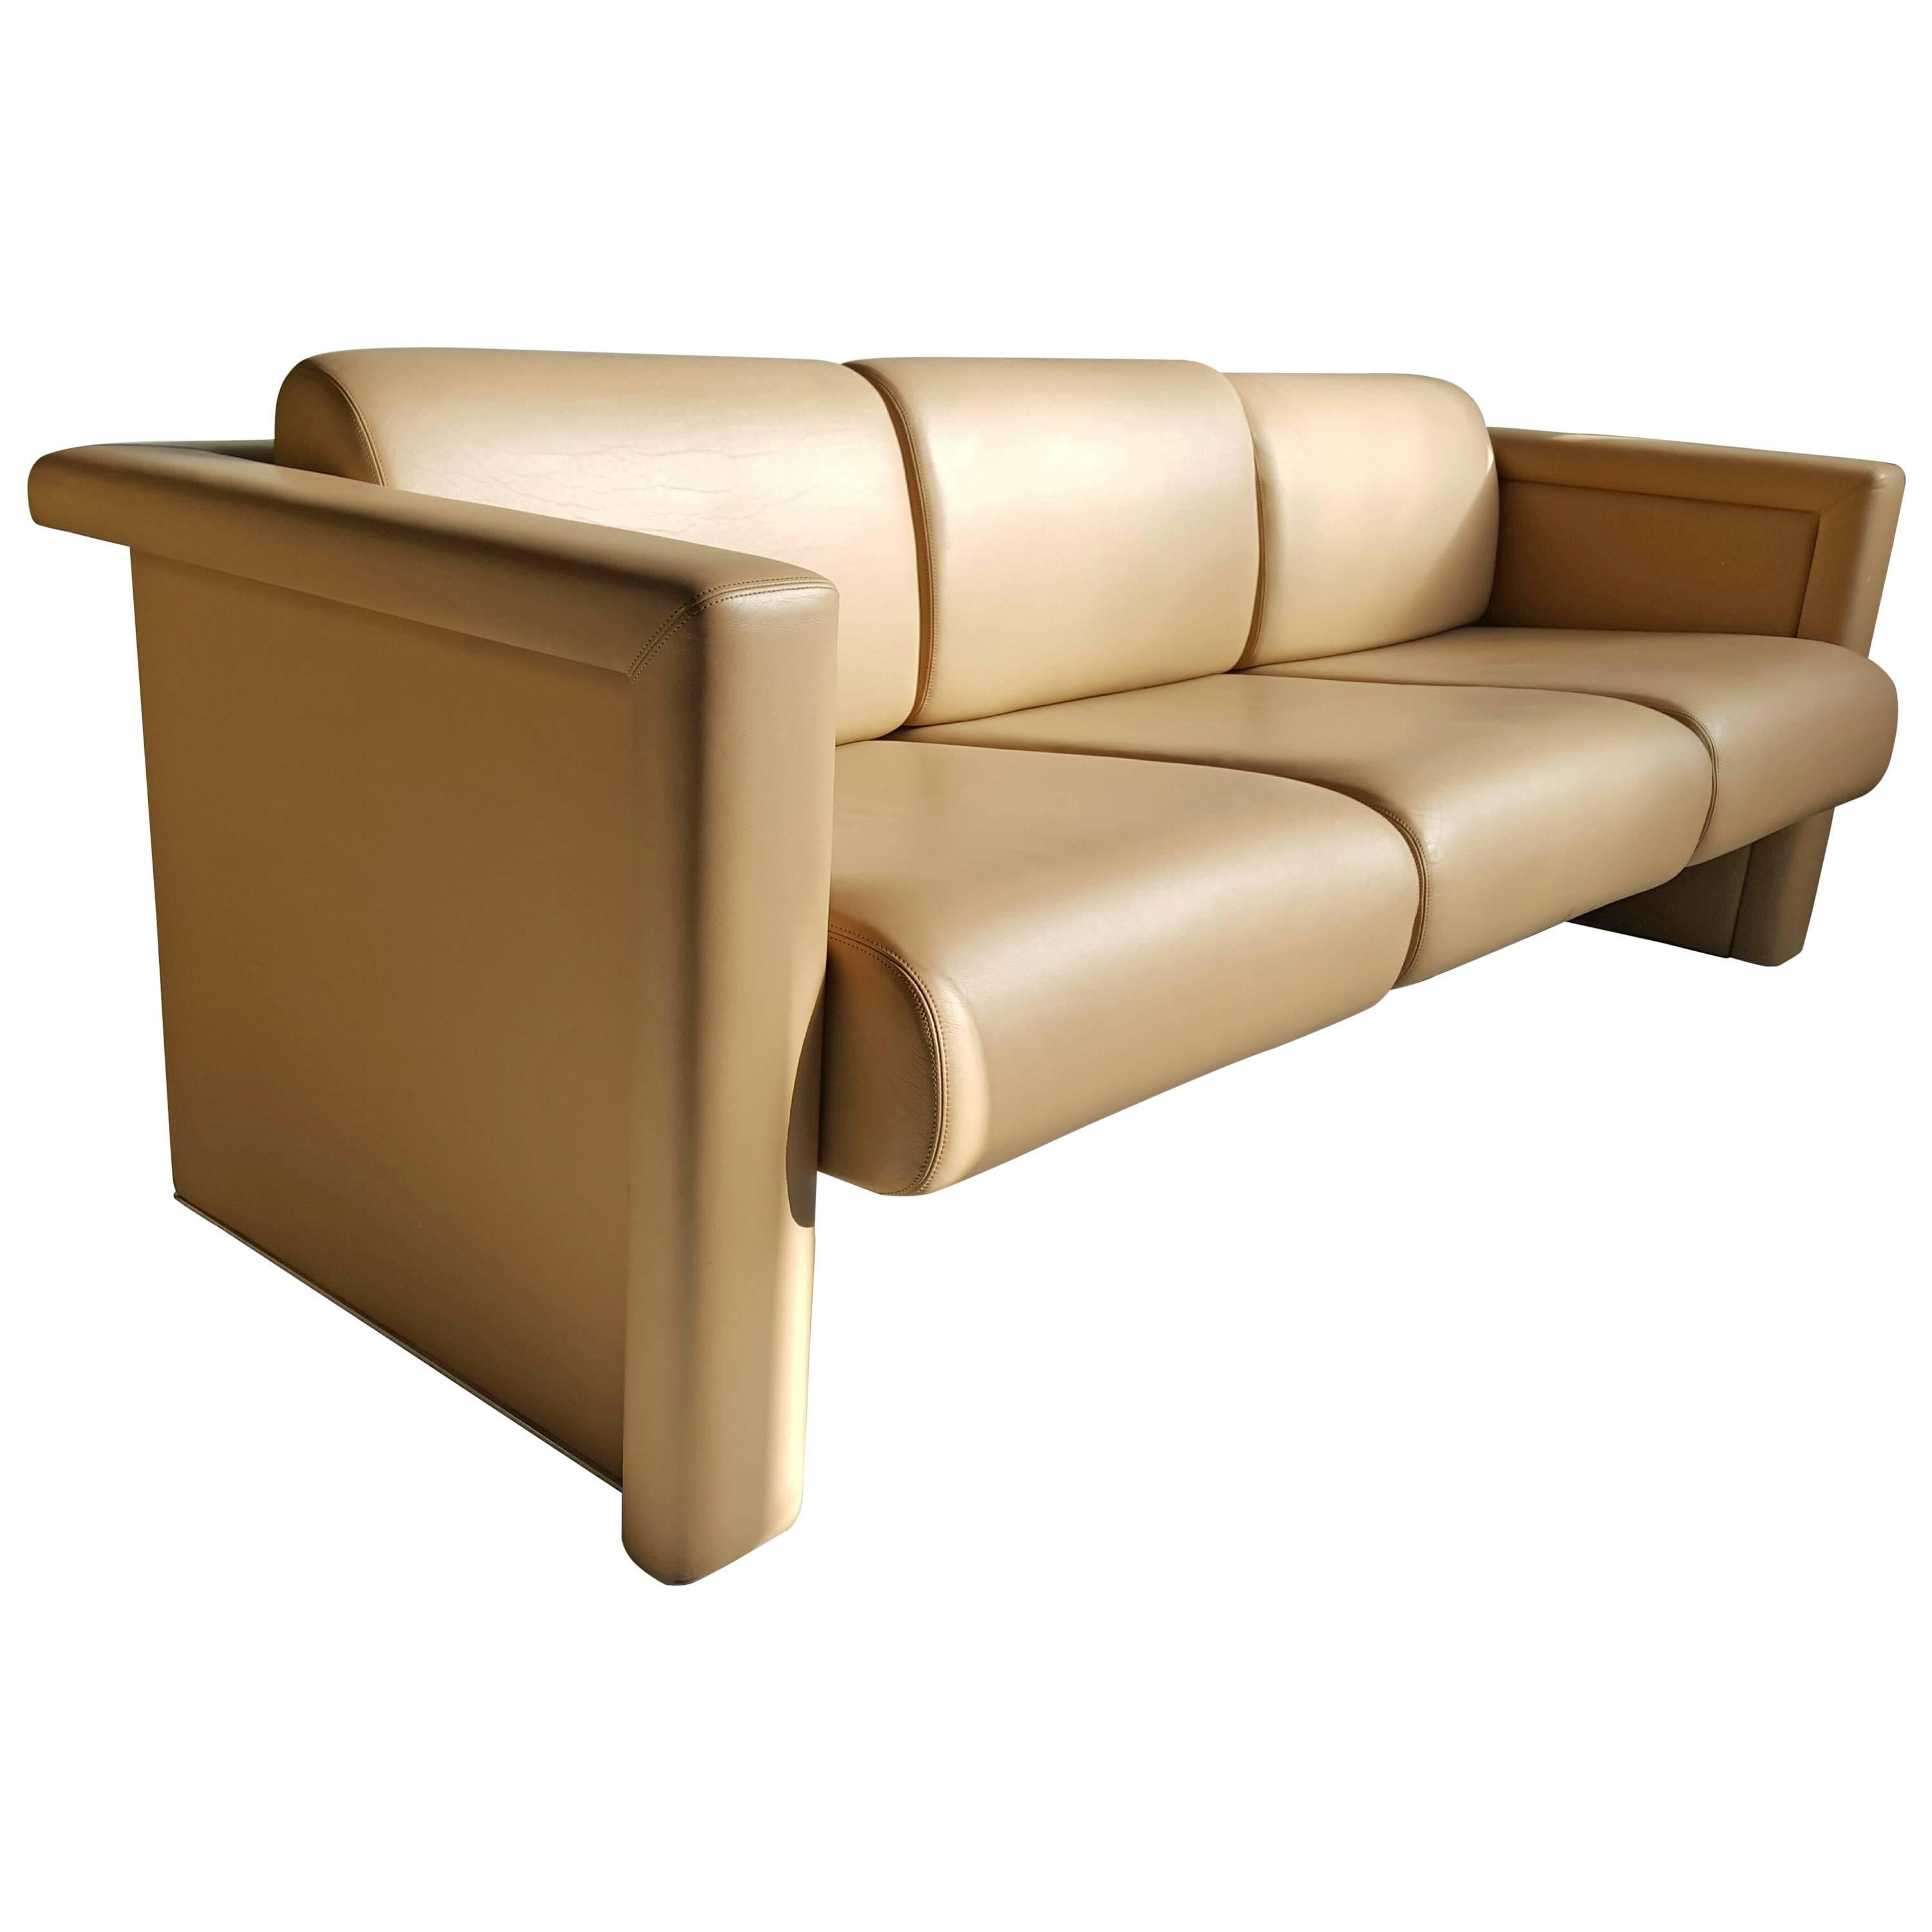 Modernist Italian Leather Sofa by Knoll